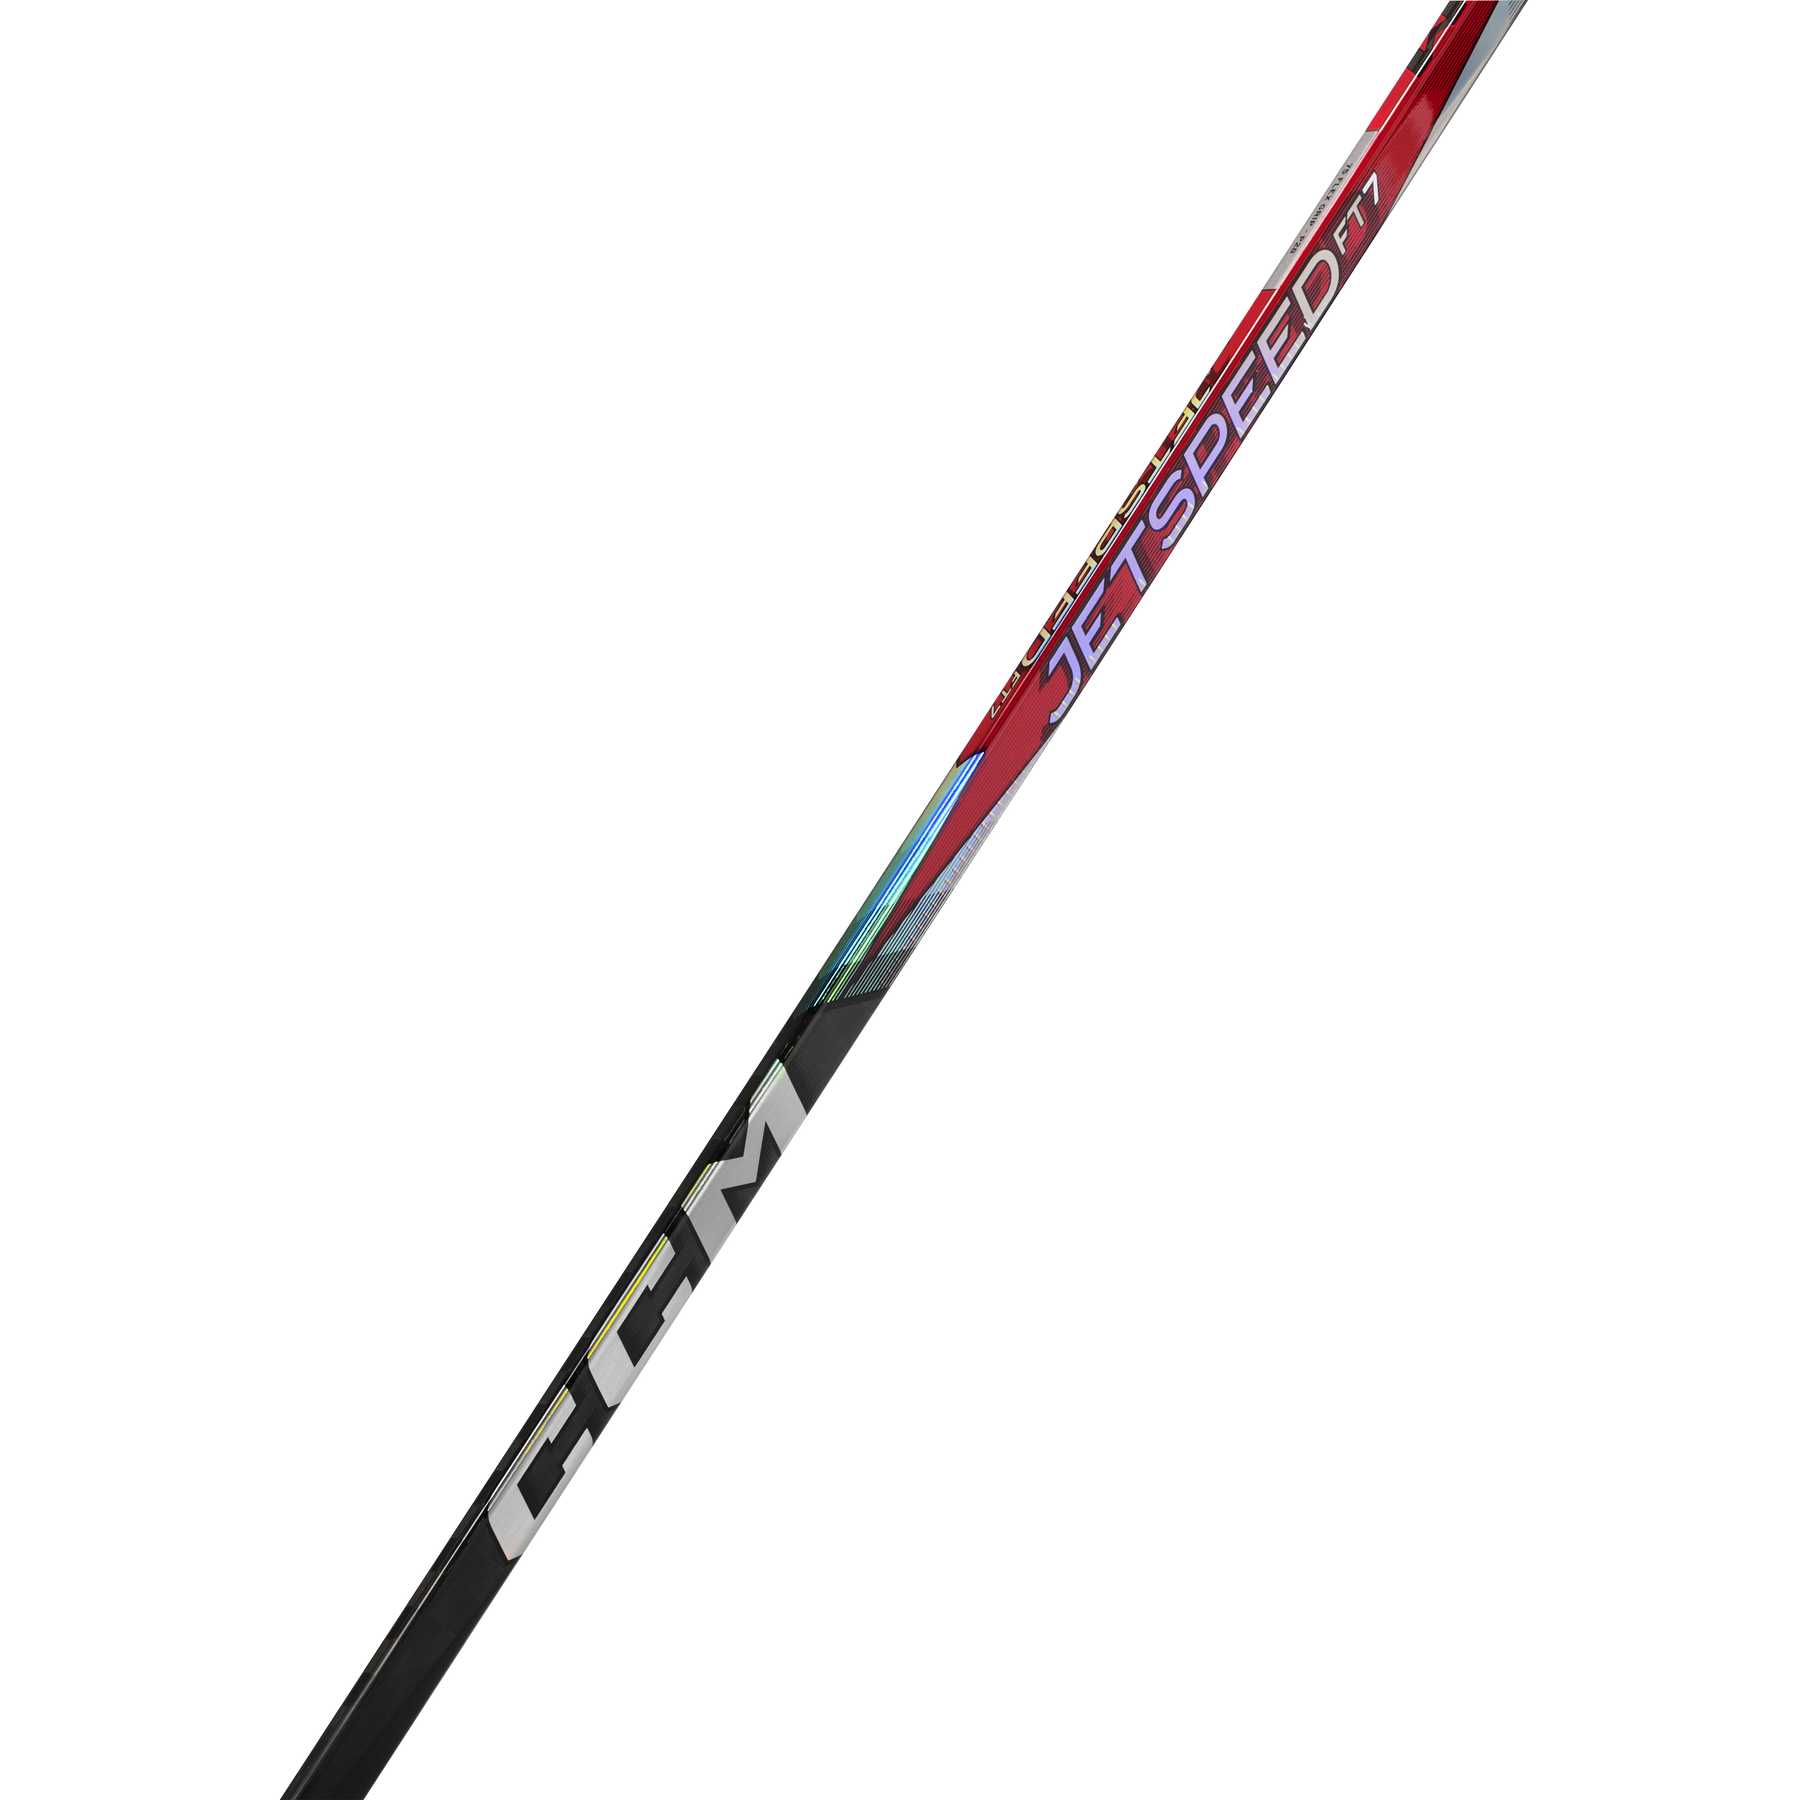 CCM JetSpeed FT7 Intermediate Hockey Stick